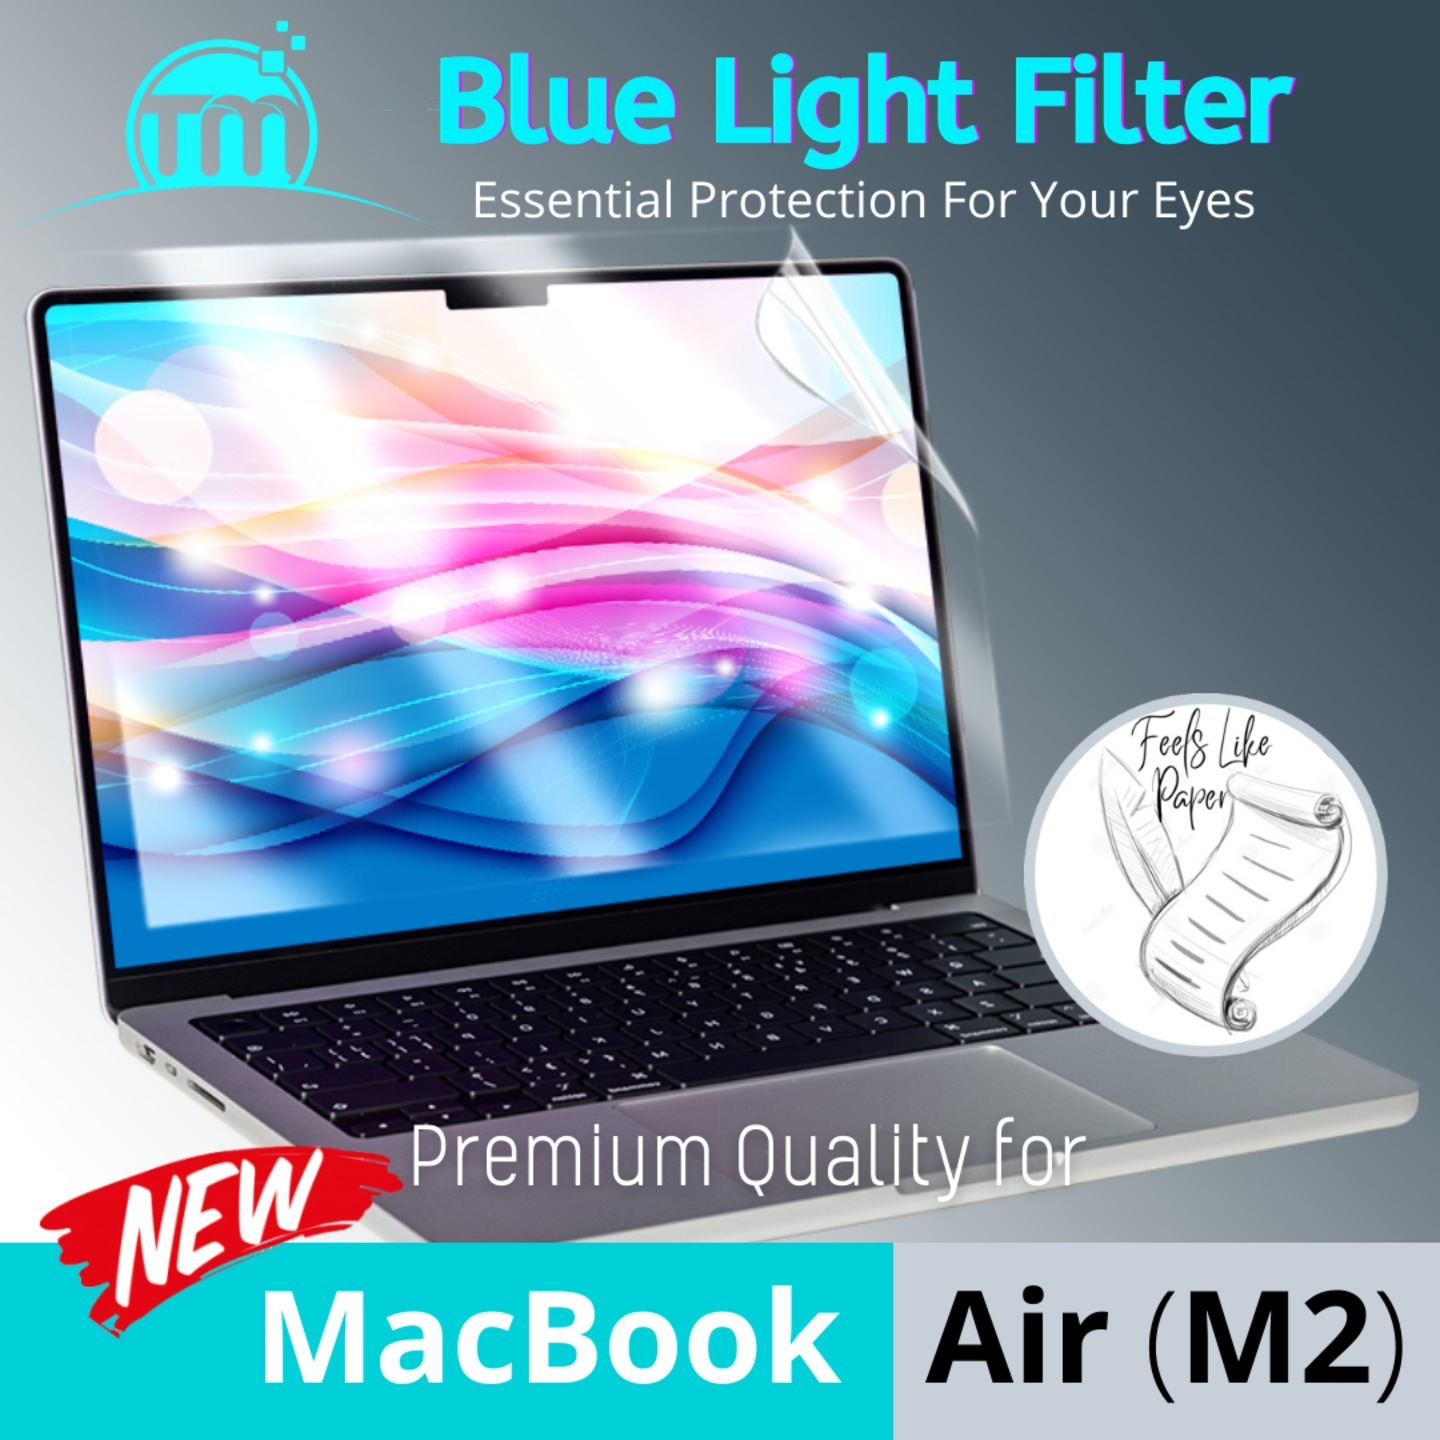 blue light filter macbook pro 13 inch